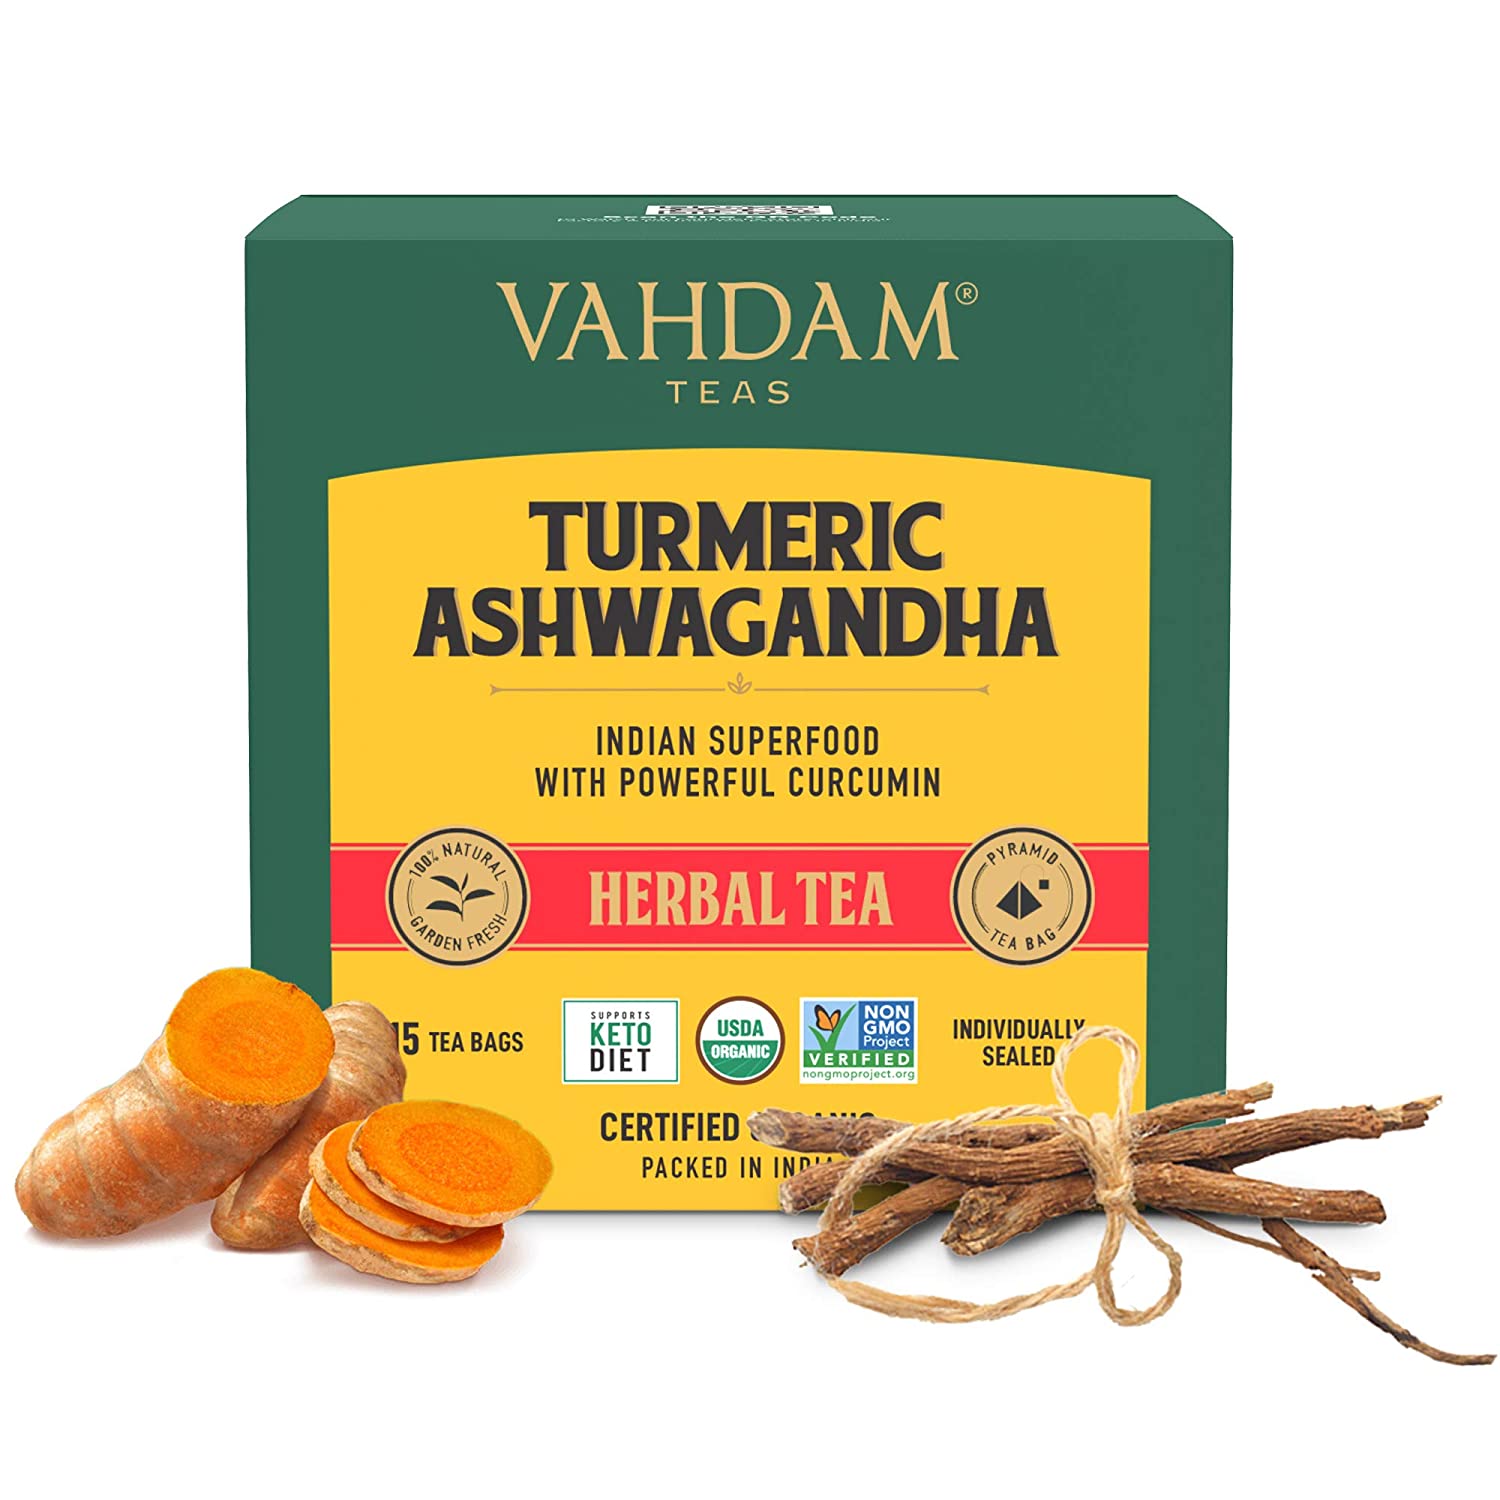 Vahdam Organic Turmeric + Aswagandha Herbal Tea Image